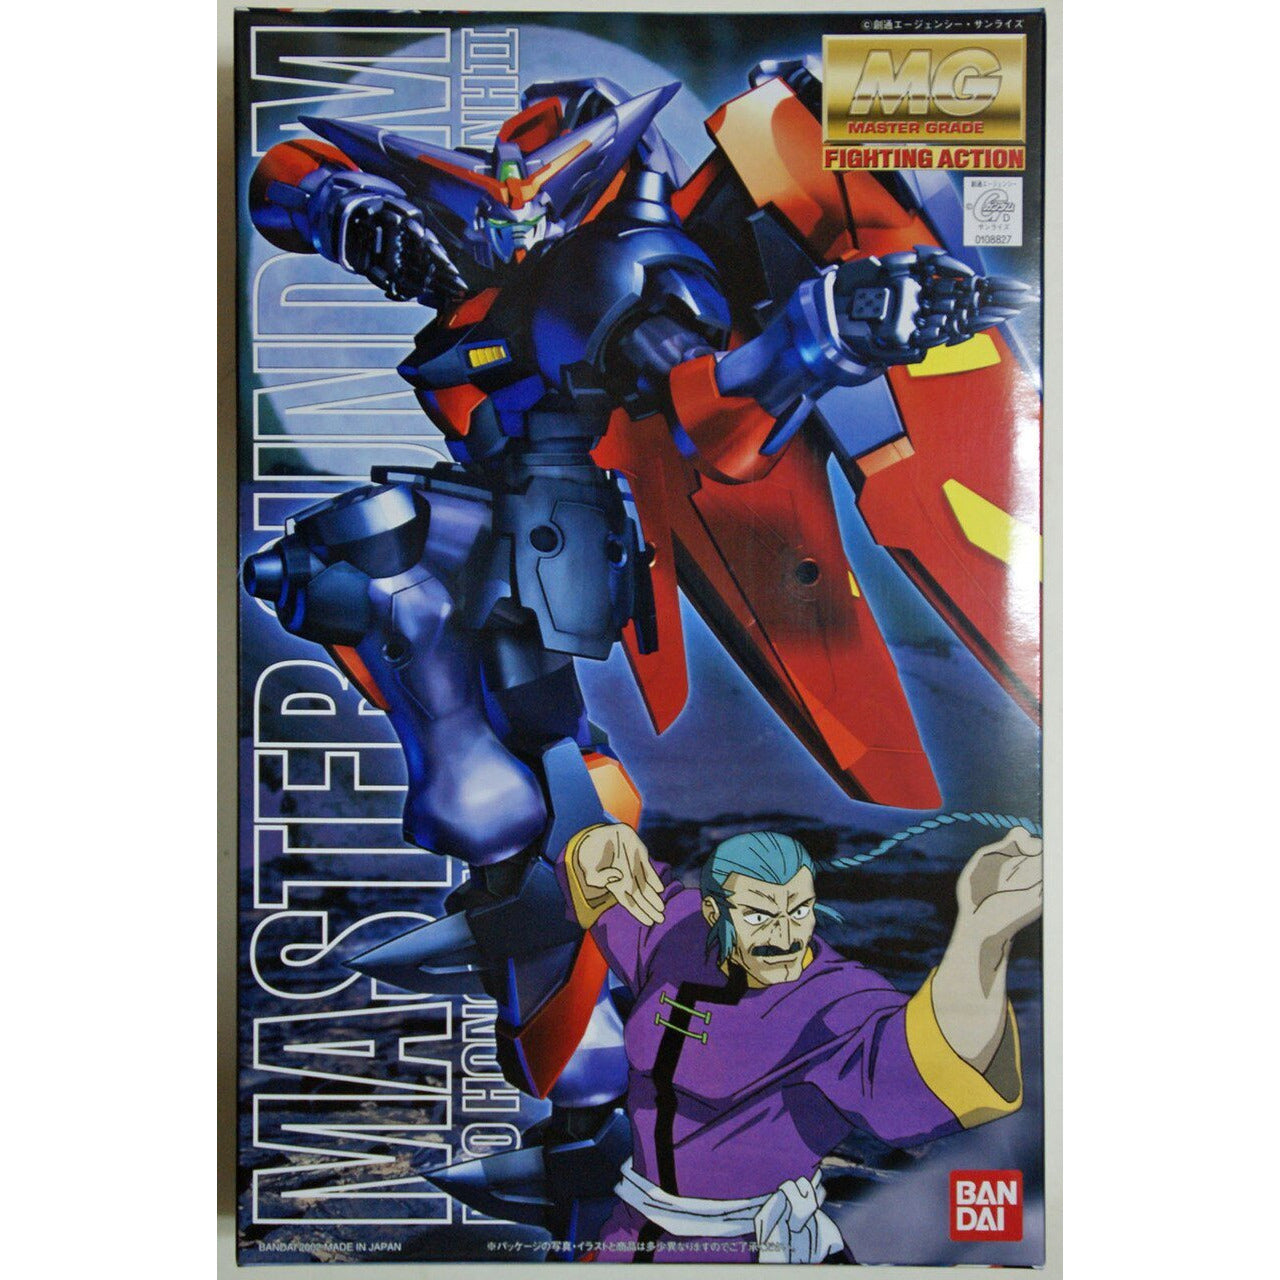 MG 1/100 GF13-001 NHII Master Gundam #5063839 by Bandai